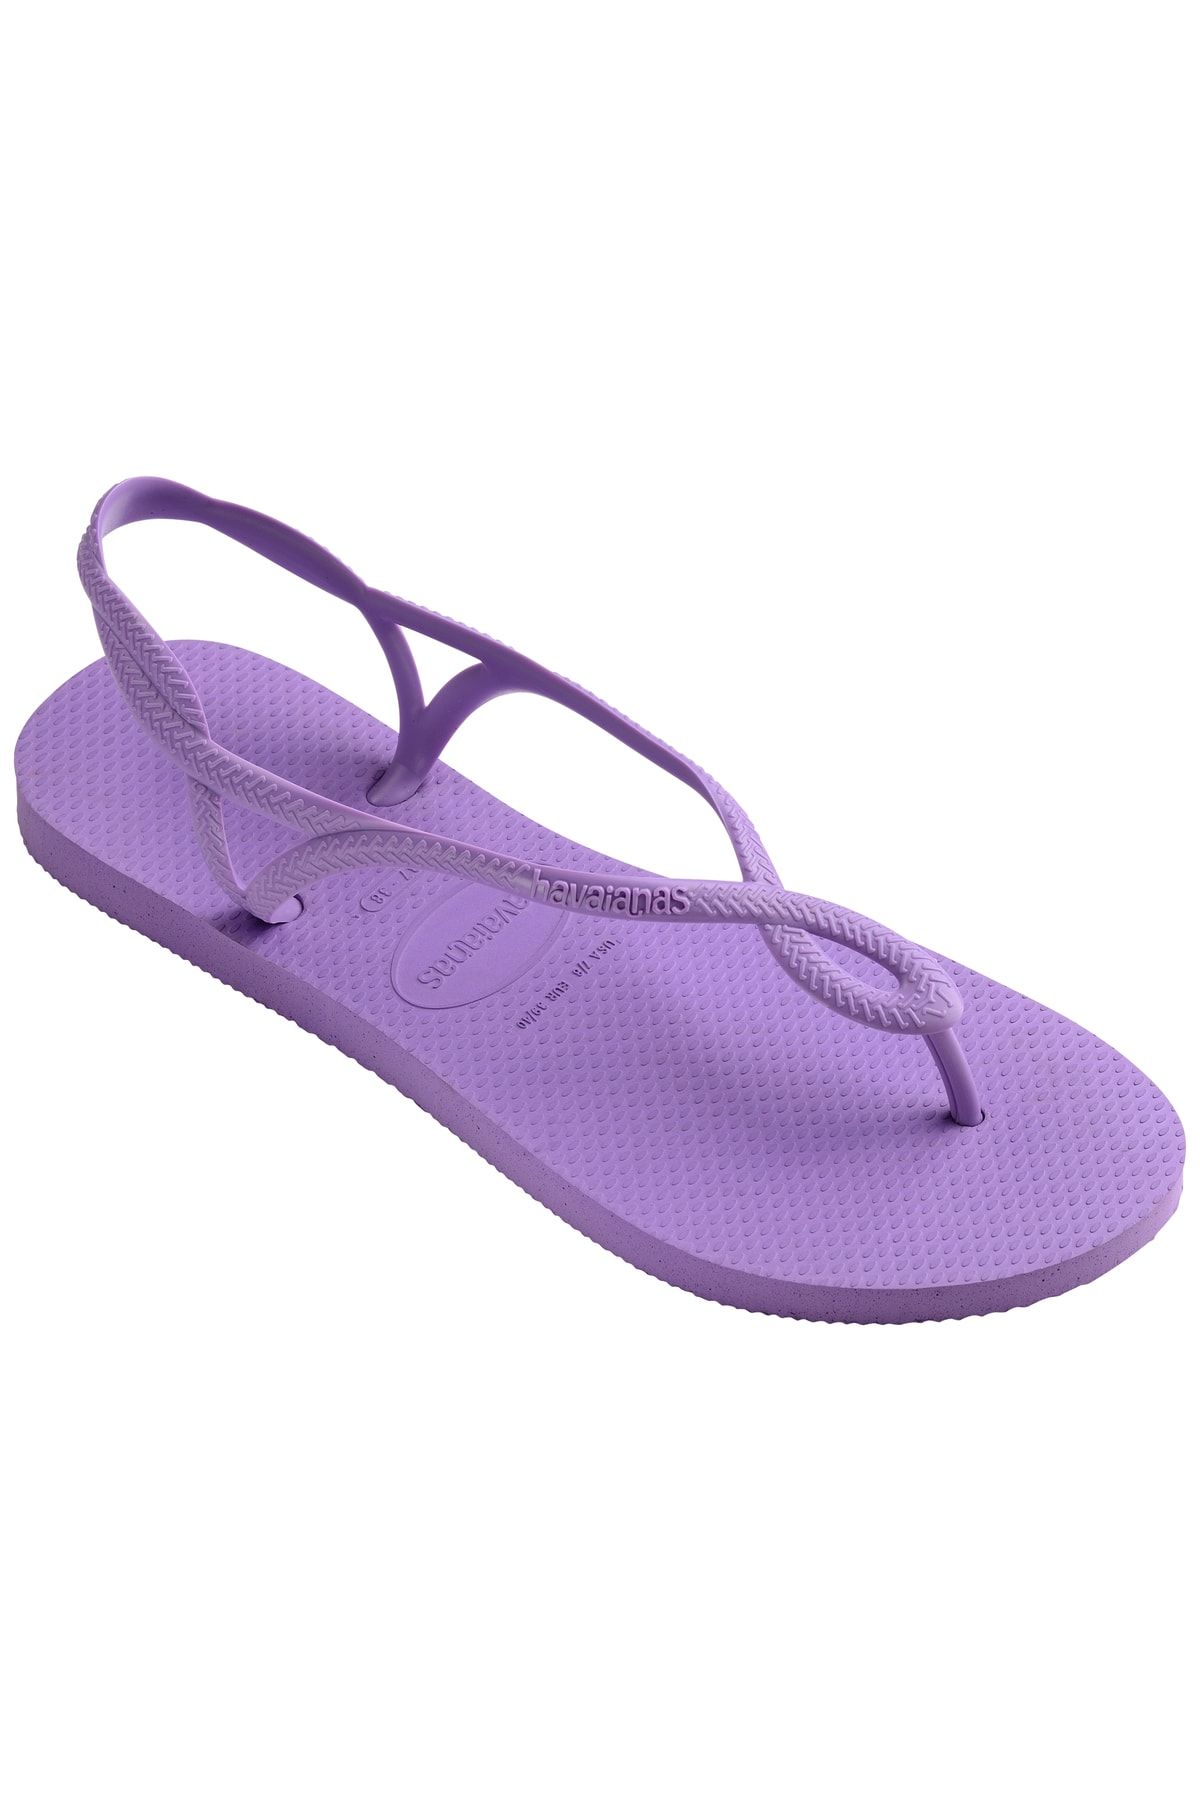 Havaianas Luna Prisma Purple Kadın Sandalet